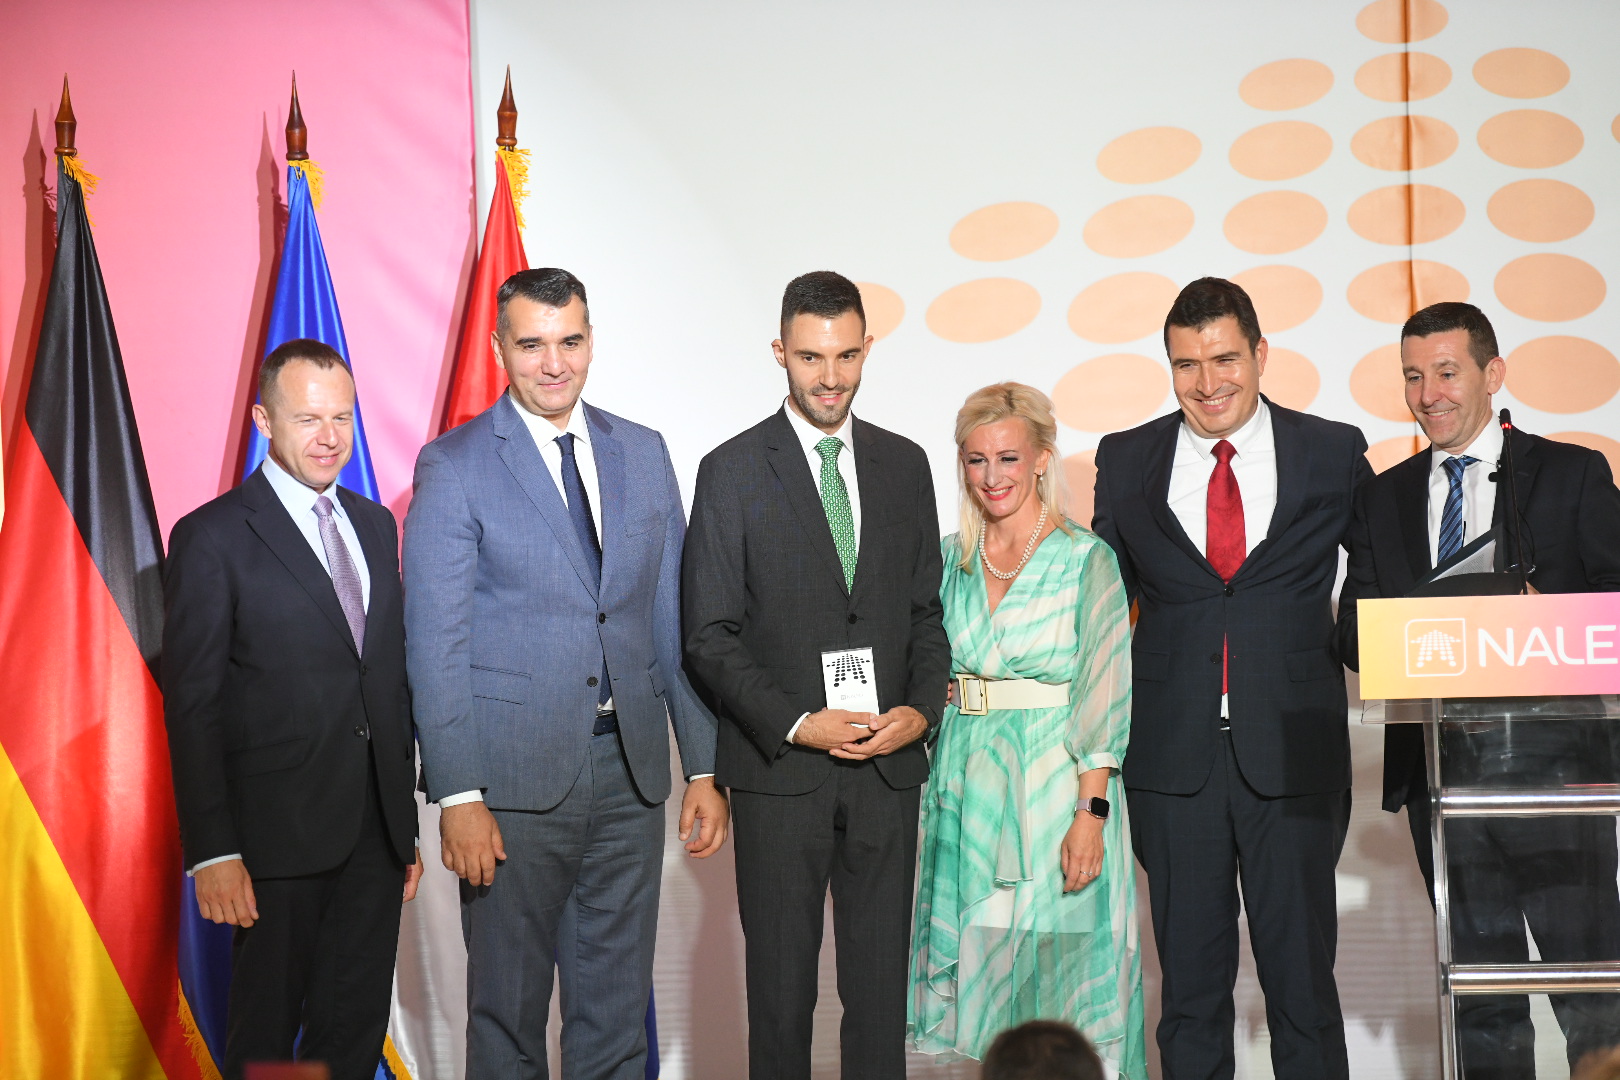 Članovi NALED-a izabrali reformske prioritete,  smanjenje poreza recept za uspeh Zapadnog Balkana